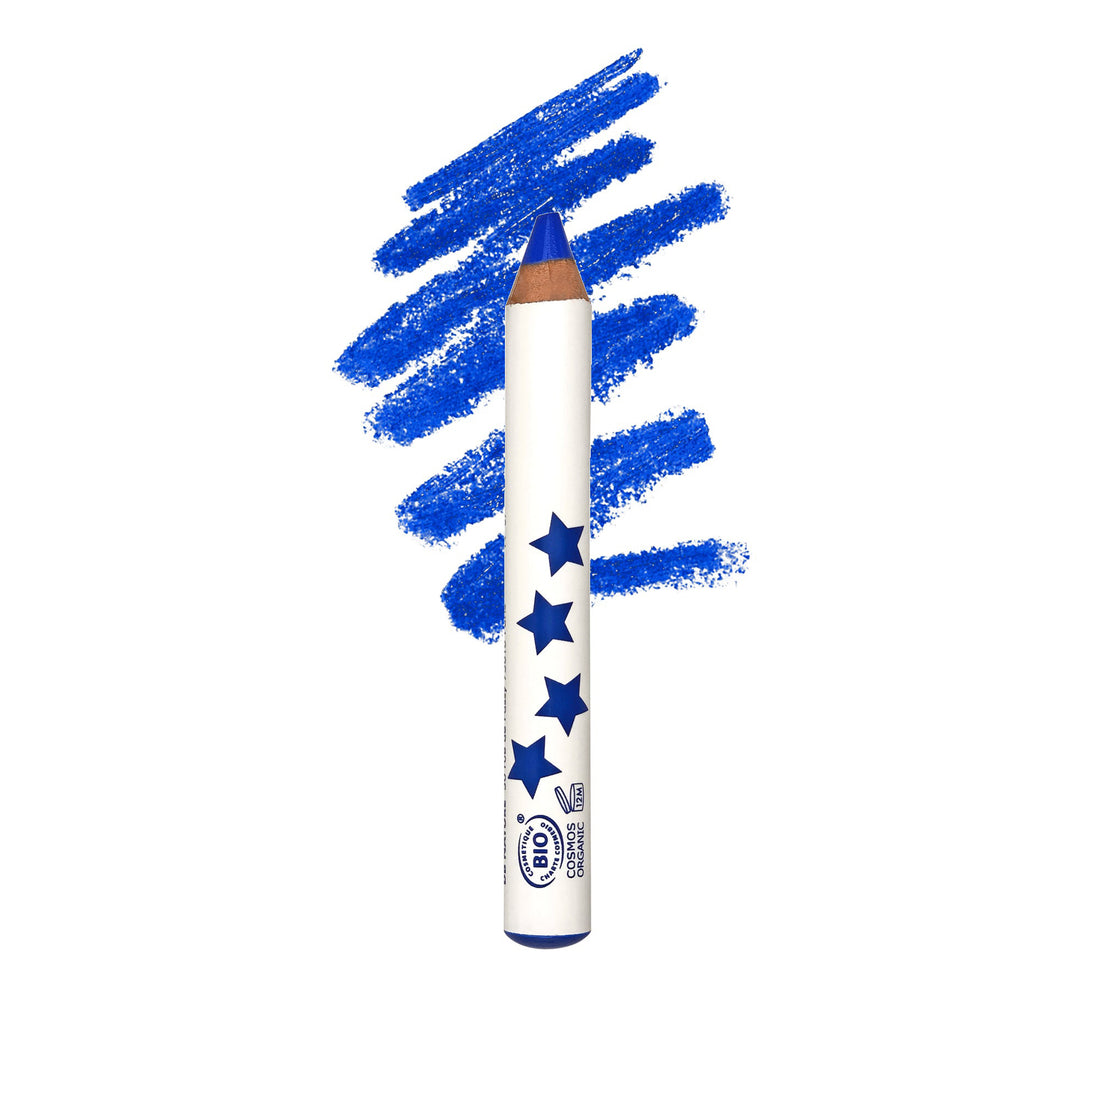 inuwet-make-up-pencil-organic-certified-navy-blue-n07-inuw-vincr07